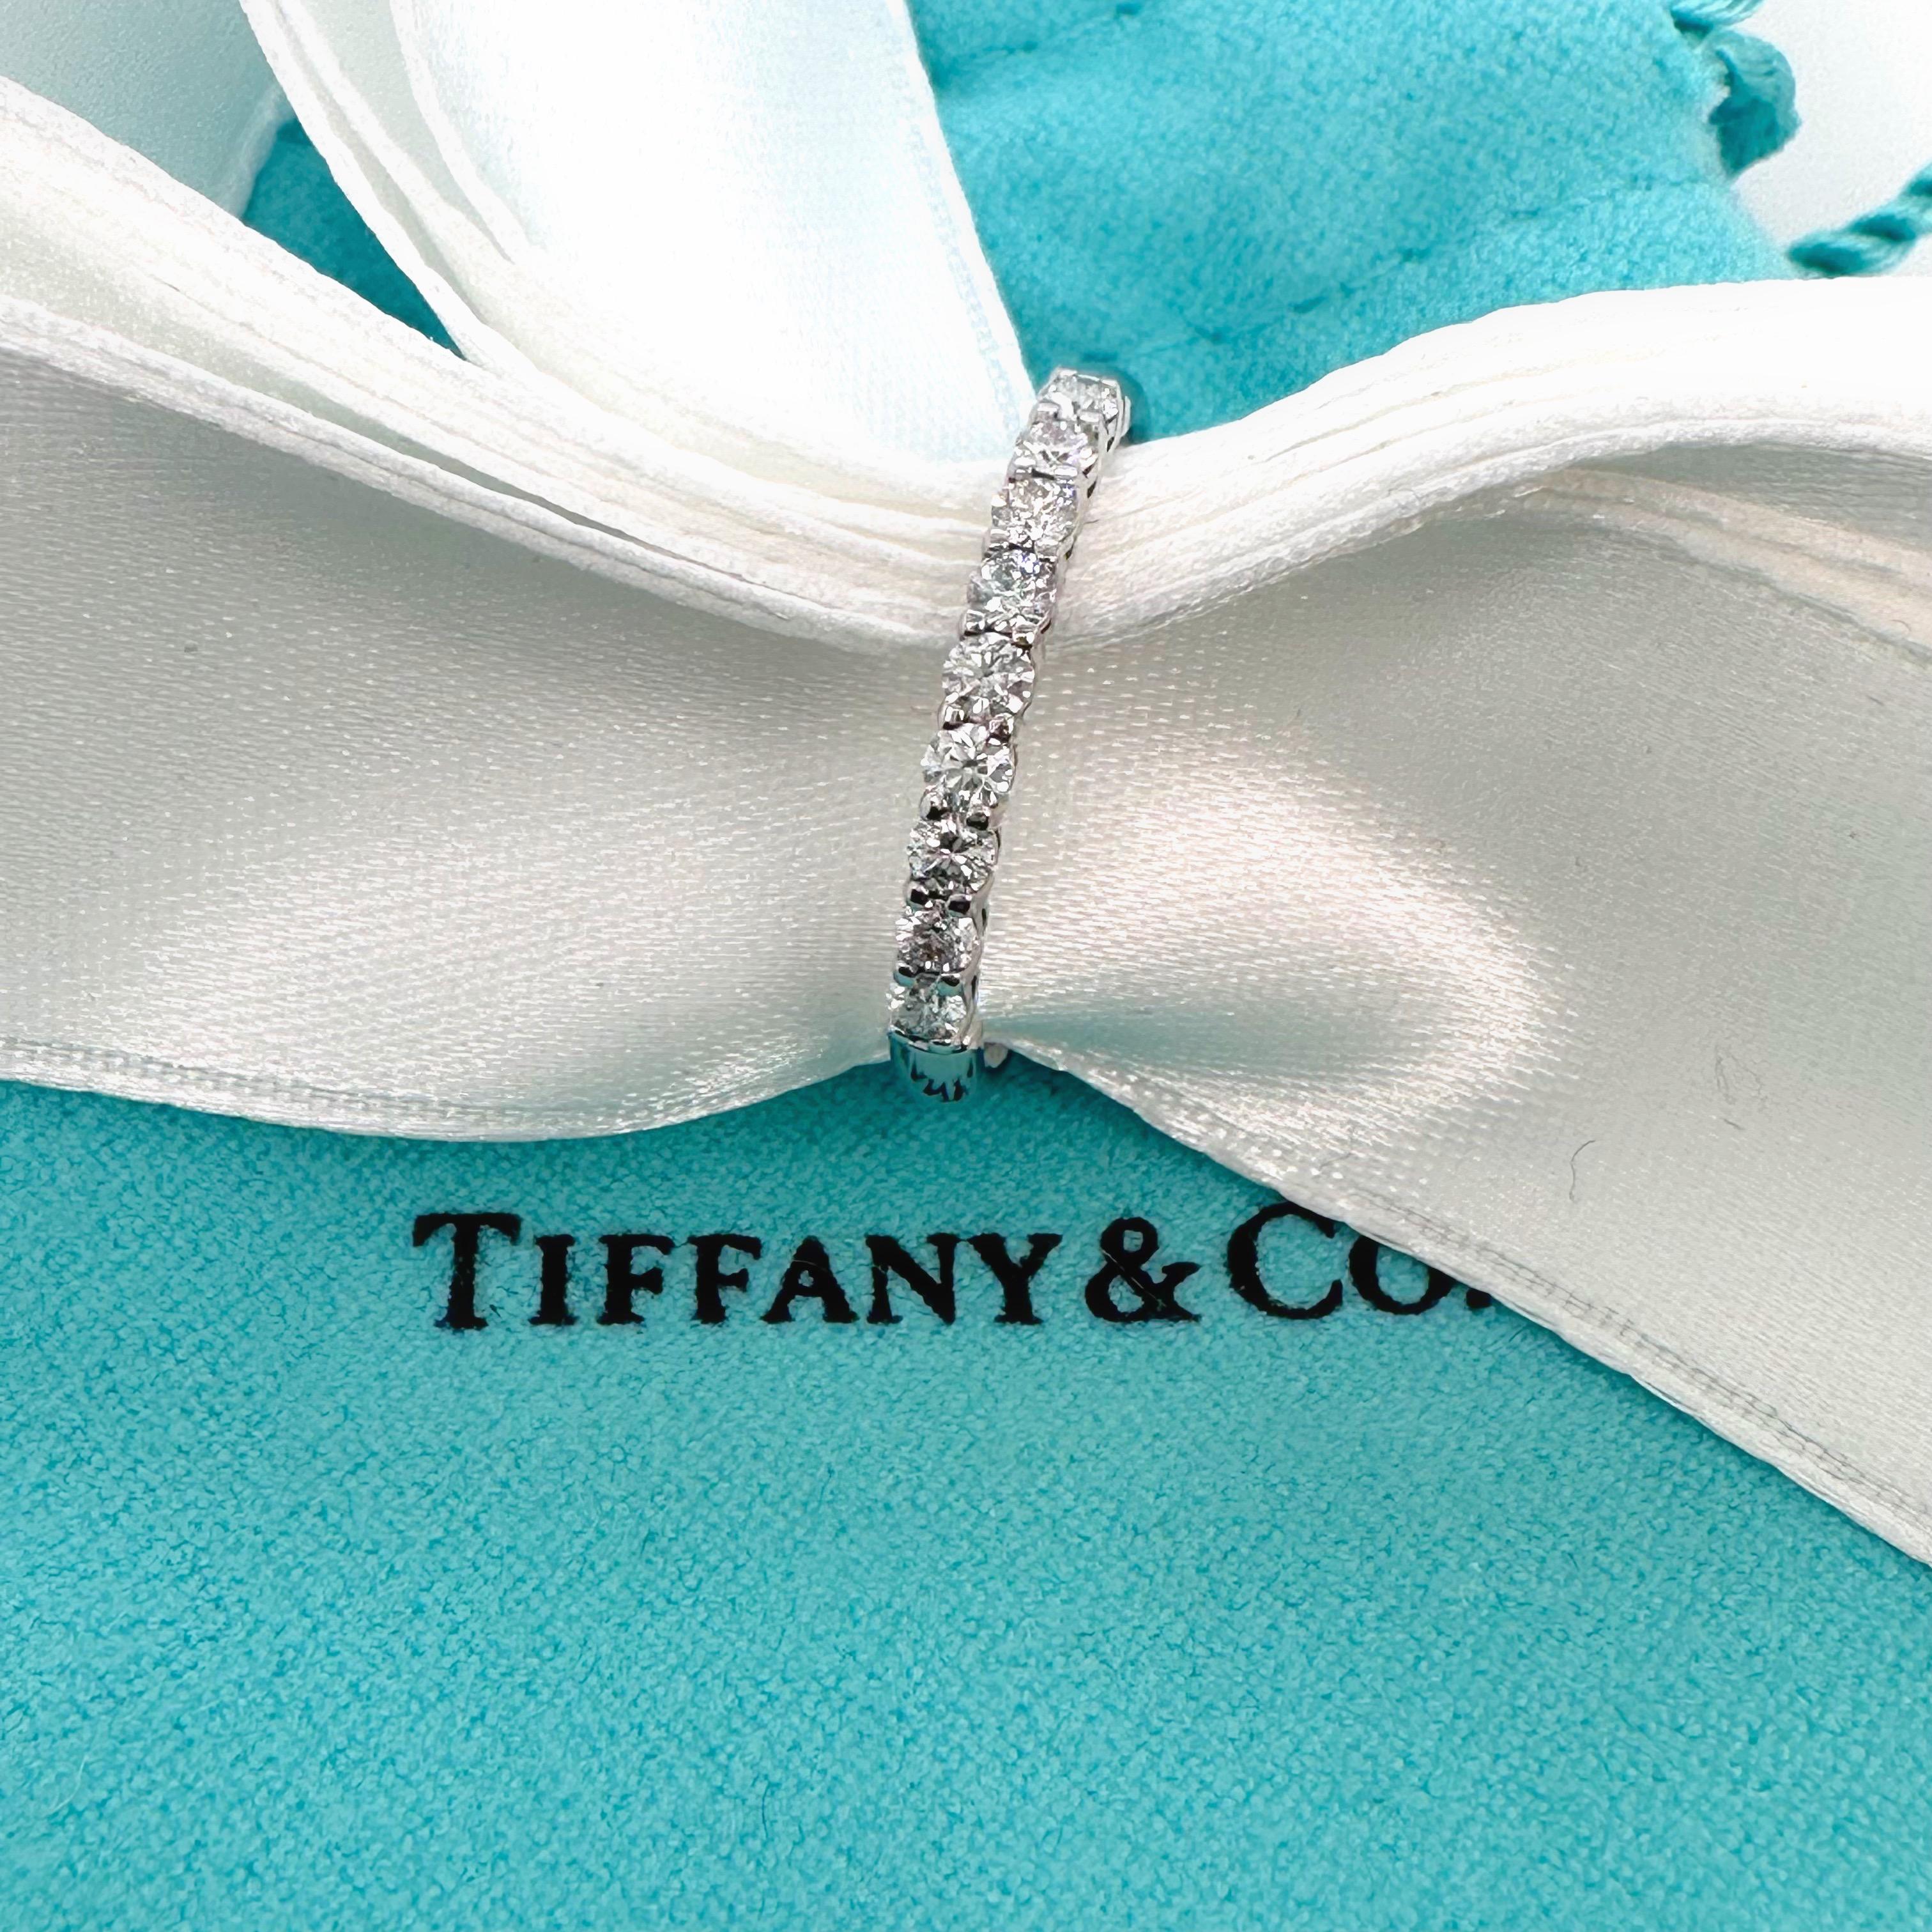 Tiffany & Co. Forever Half Circle Diamond Band
Style:  Band
Ref. number:  600034405
Metal:  Platinum PT950
Size:  6.75 sizable
Measurements:  2.2 mm
TCW:  0.27 tcw
Main Diamond:  9 Round Brilliant Diamonds
Hallmark:  TIFFANY&CO. PT50
Includes:  T&C